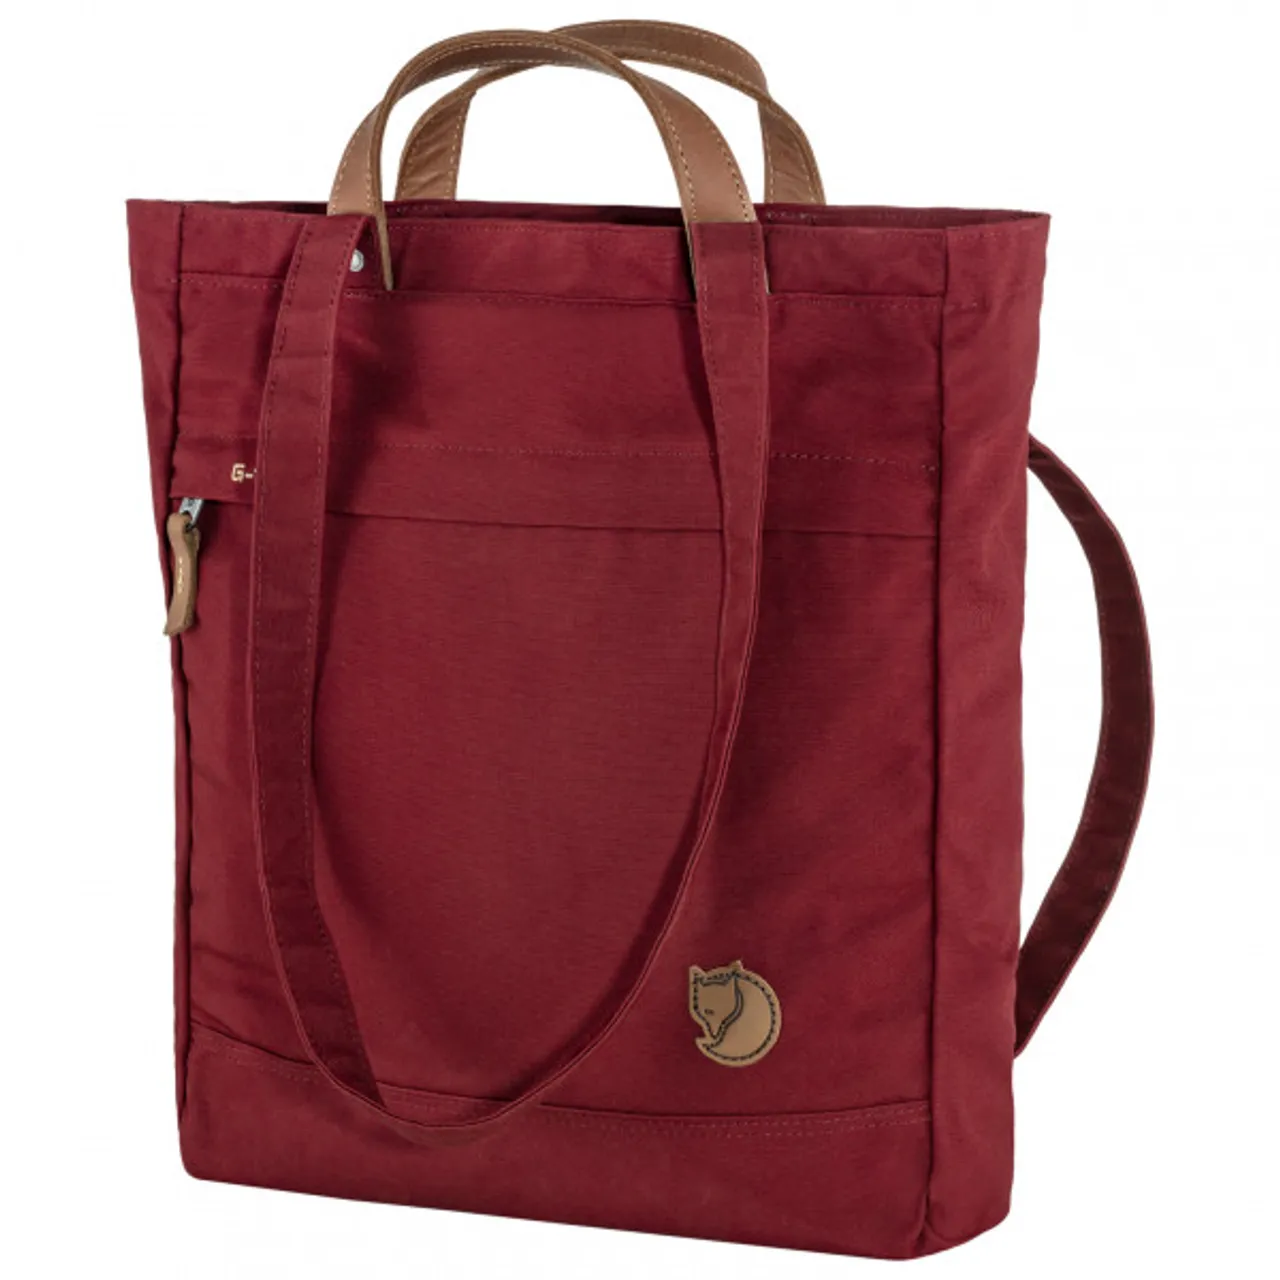 Fjällräven - Totepack No. 1 - Shopping bag size 14 l, red